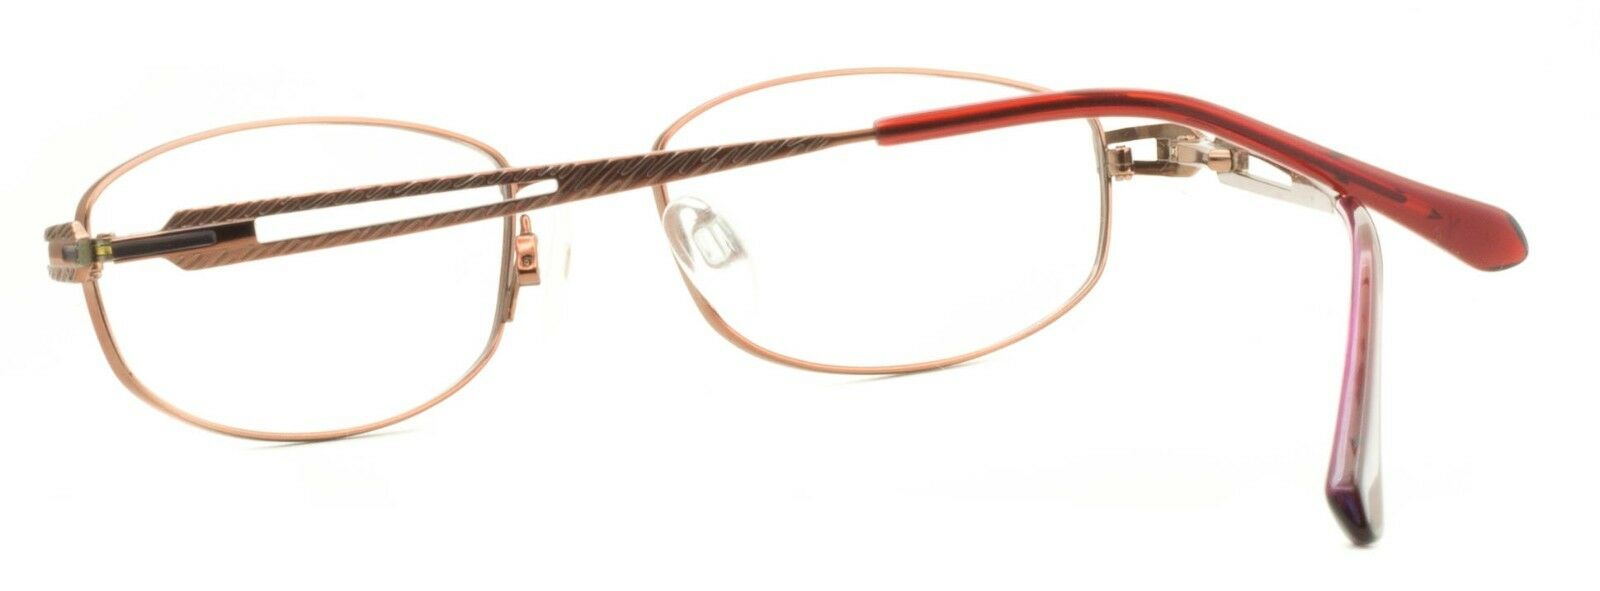 CHARMANT CH10864 RE Titanium Eyewear FRAMES RX Optical Eyeglasses Glasses - New